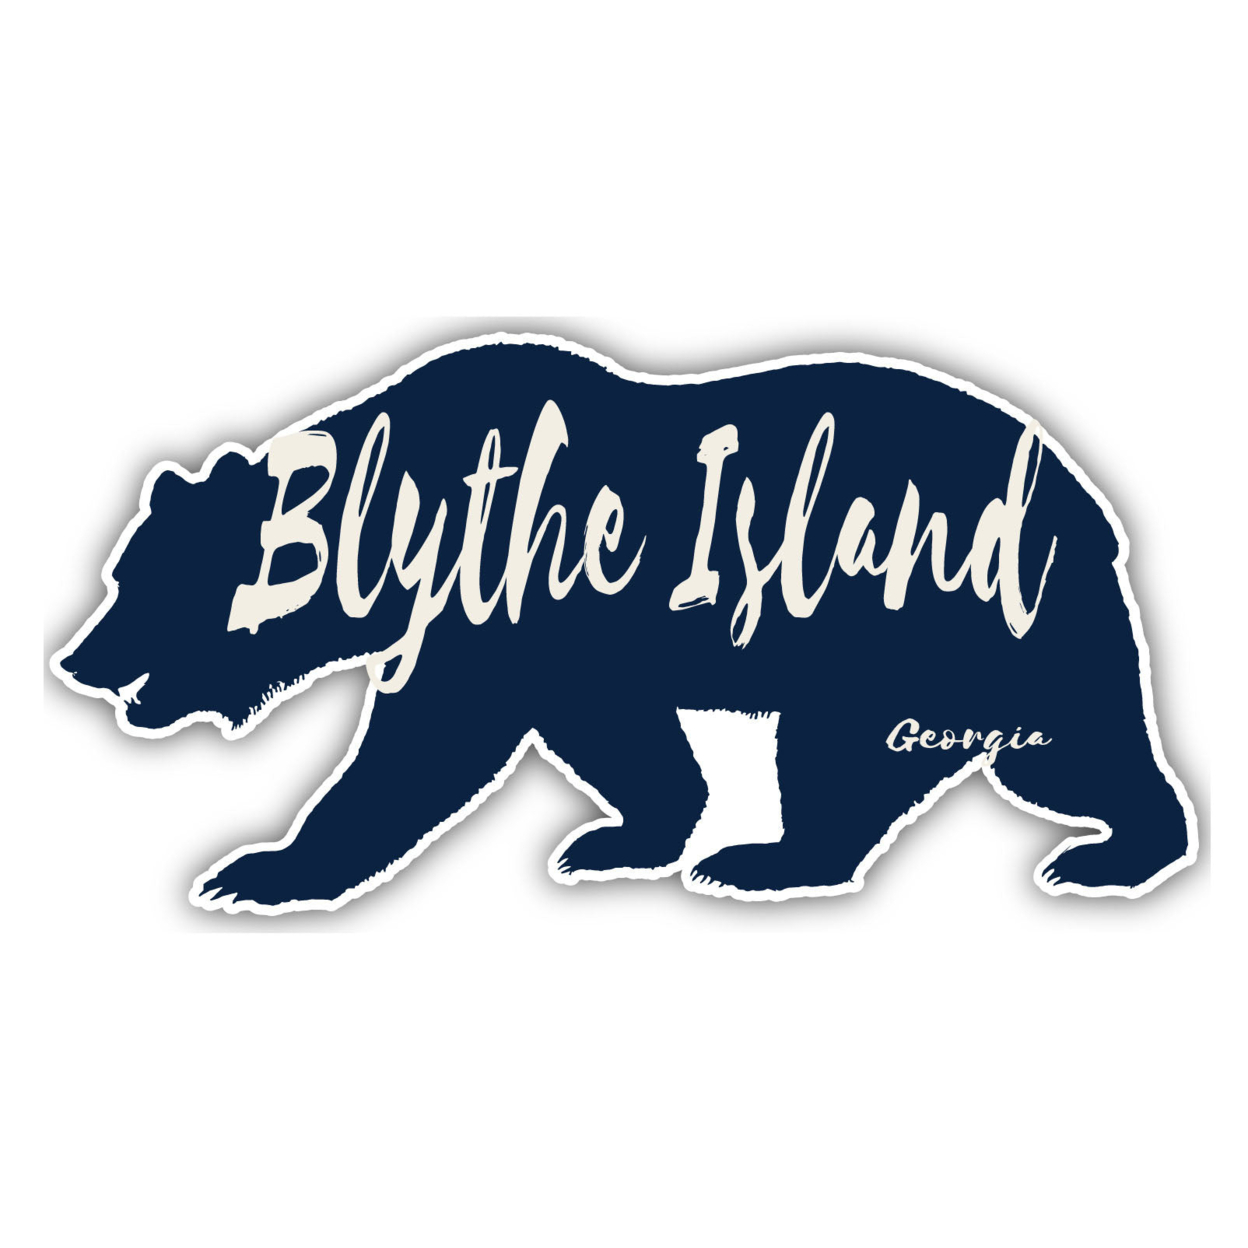 Blythe Island Georgia Souvenir Decorative Stickers (Choose Theme And Size) - Single Unit, 2-Inch, Bear